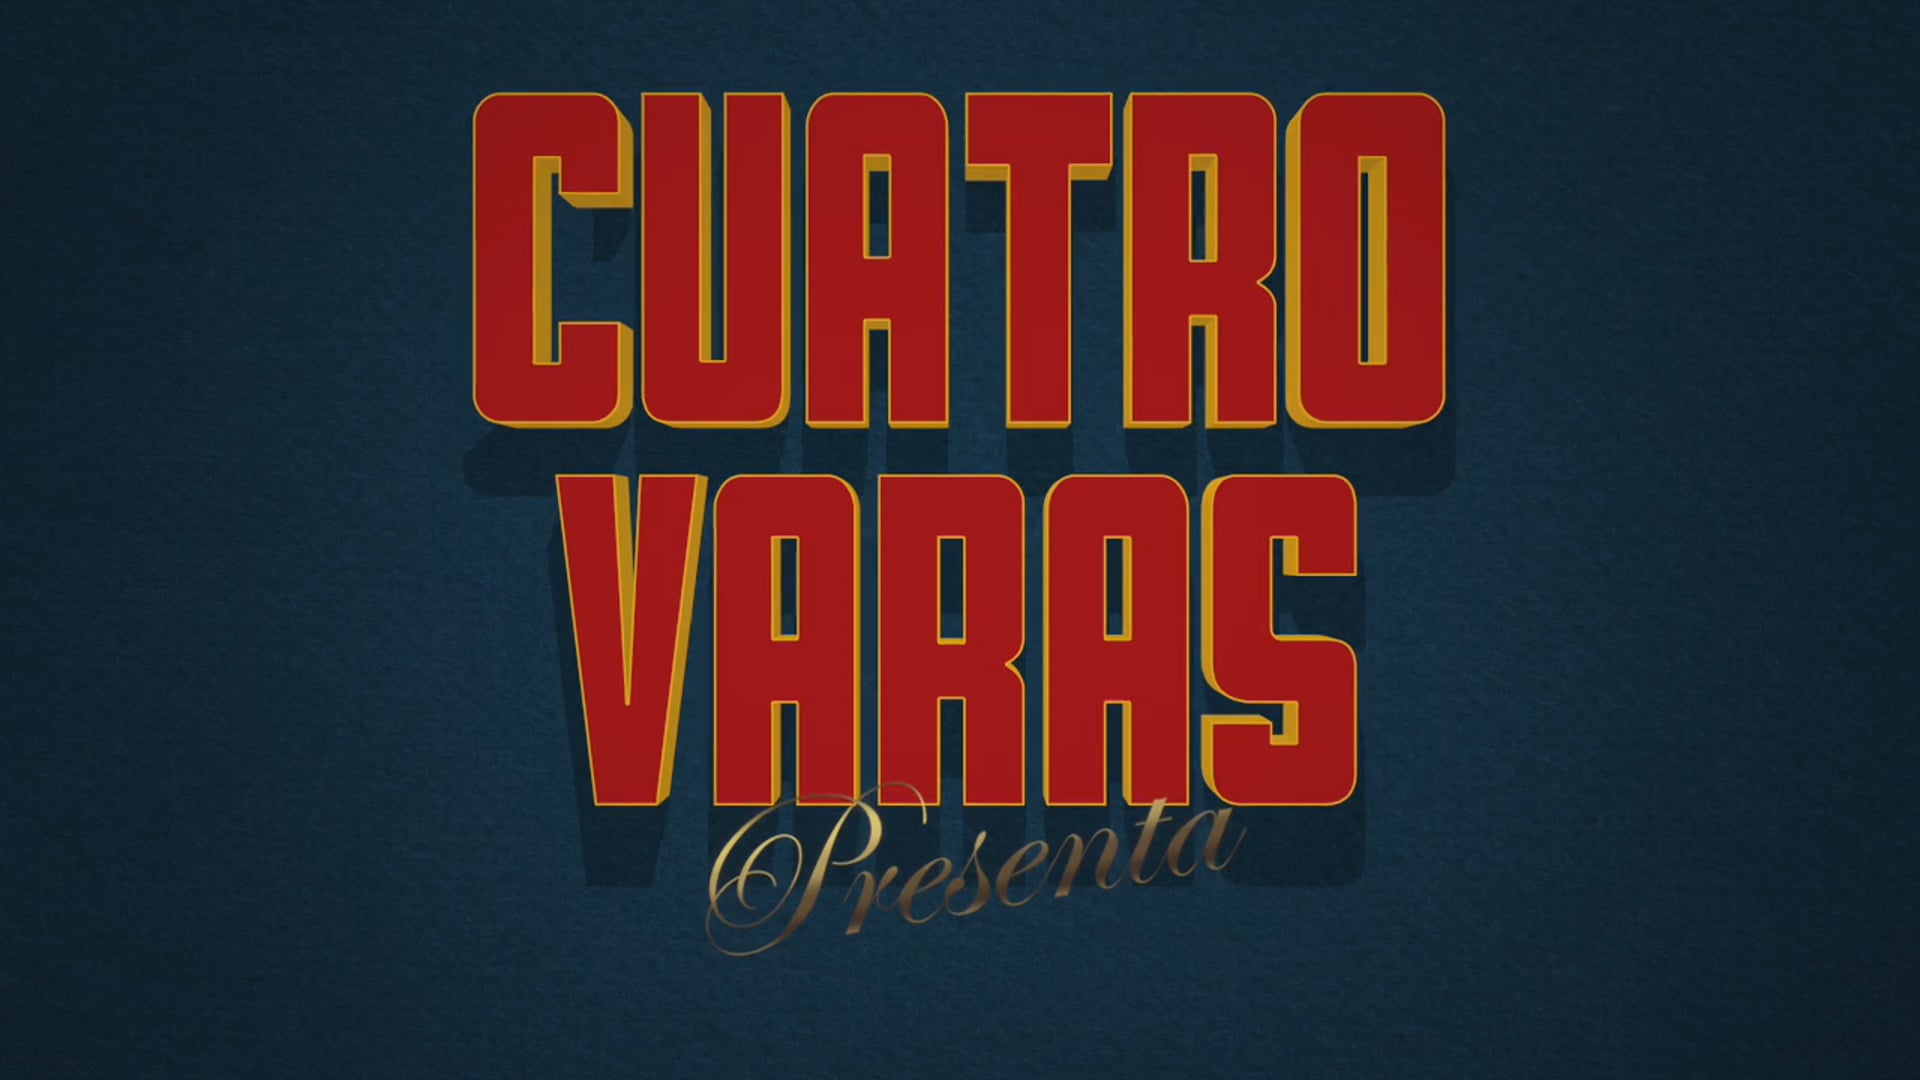 "RESPECT" / CUATRO VARAS